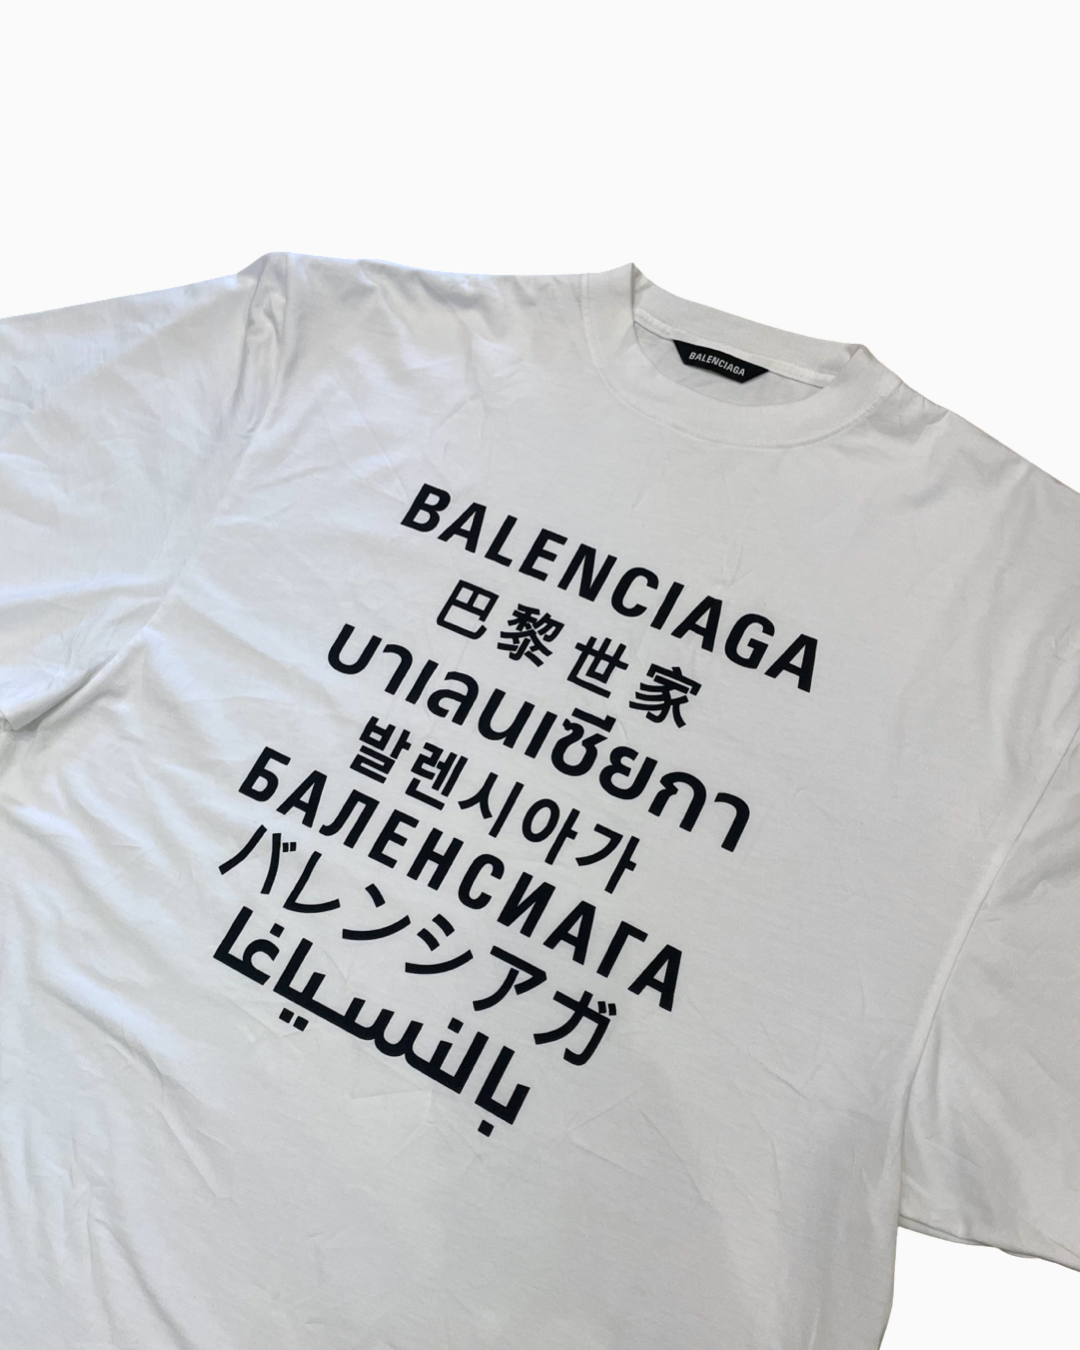 Balenciaga Paris Tee Size S Mens Fashion Tops  Sets Tshirts  Polo Shirts  on Carousell